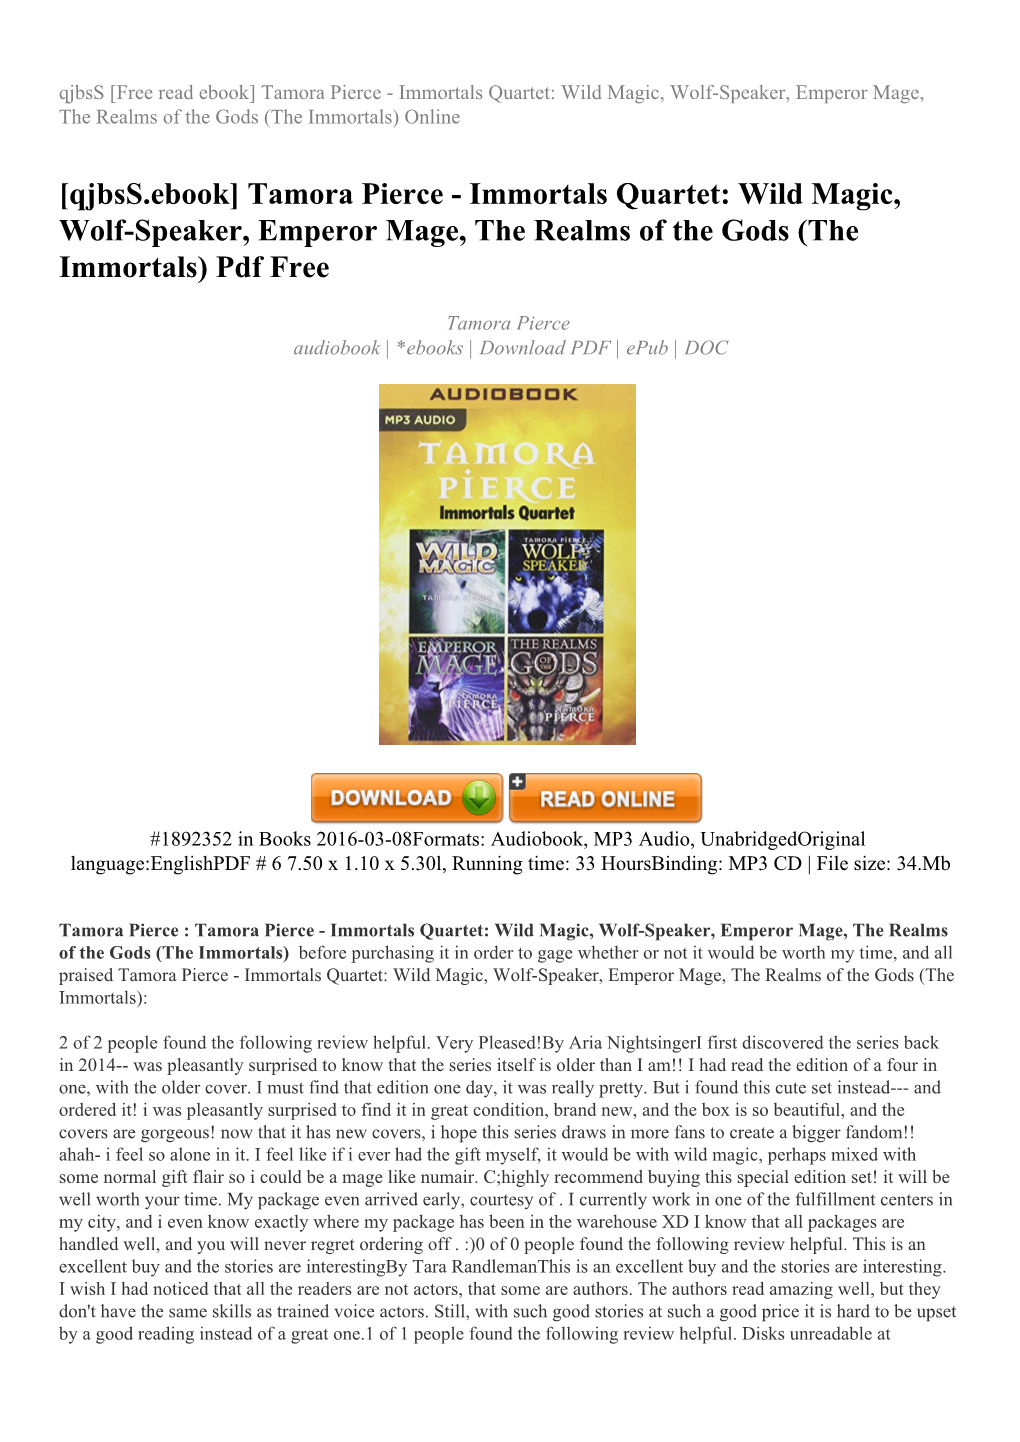 Tamora Pierce - Immortals Quartet: Wild Magic, Wolf-Speaker, Emperor Mage, the Realms of the Gods (The Immortals) Online